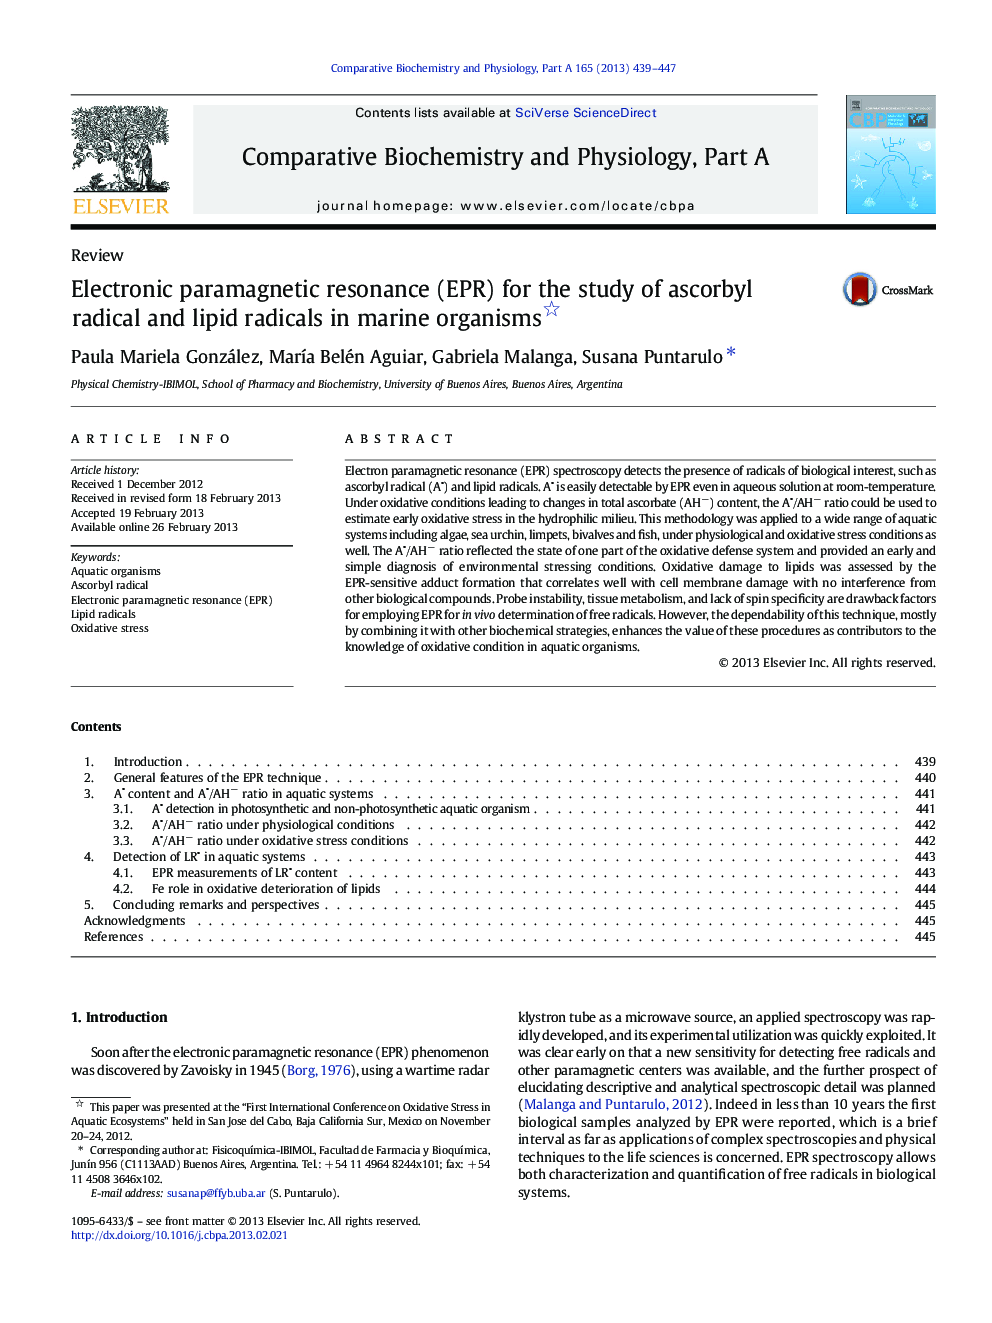 Electronic paramagnetic resonance (EPR) for the study of ascorbyl radical and lipid radicals in marine organisms 